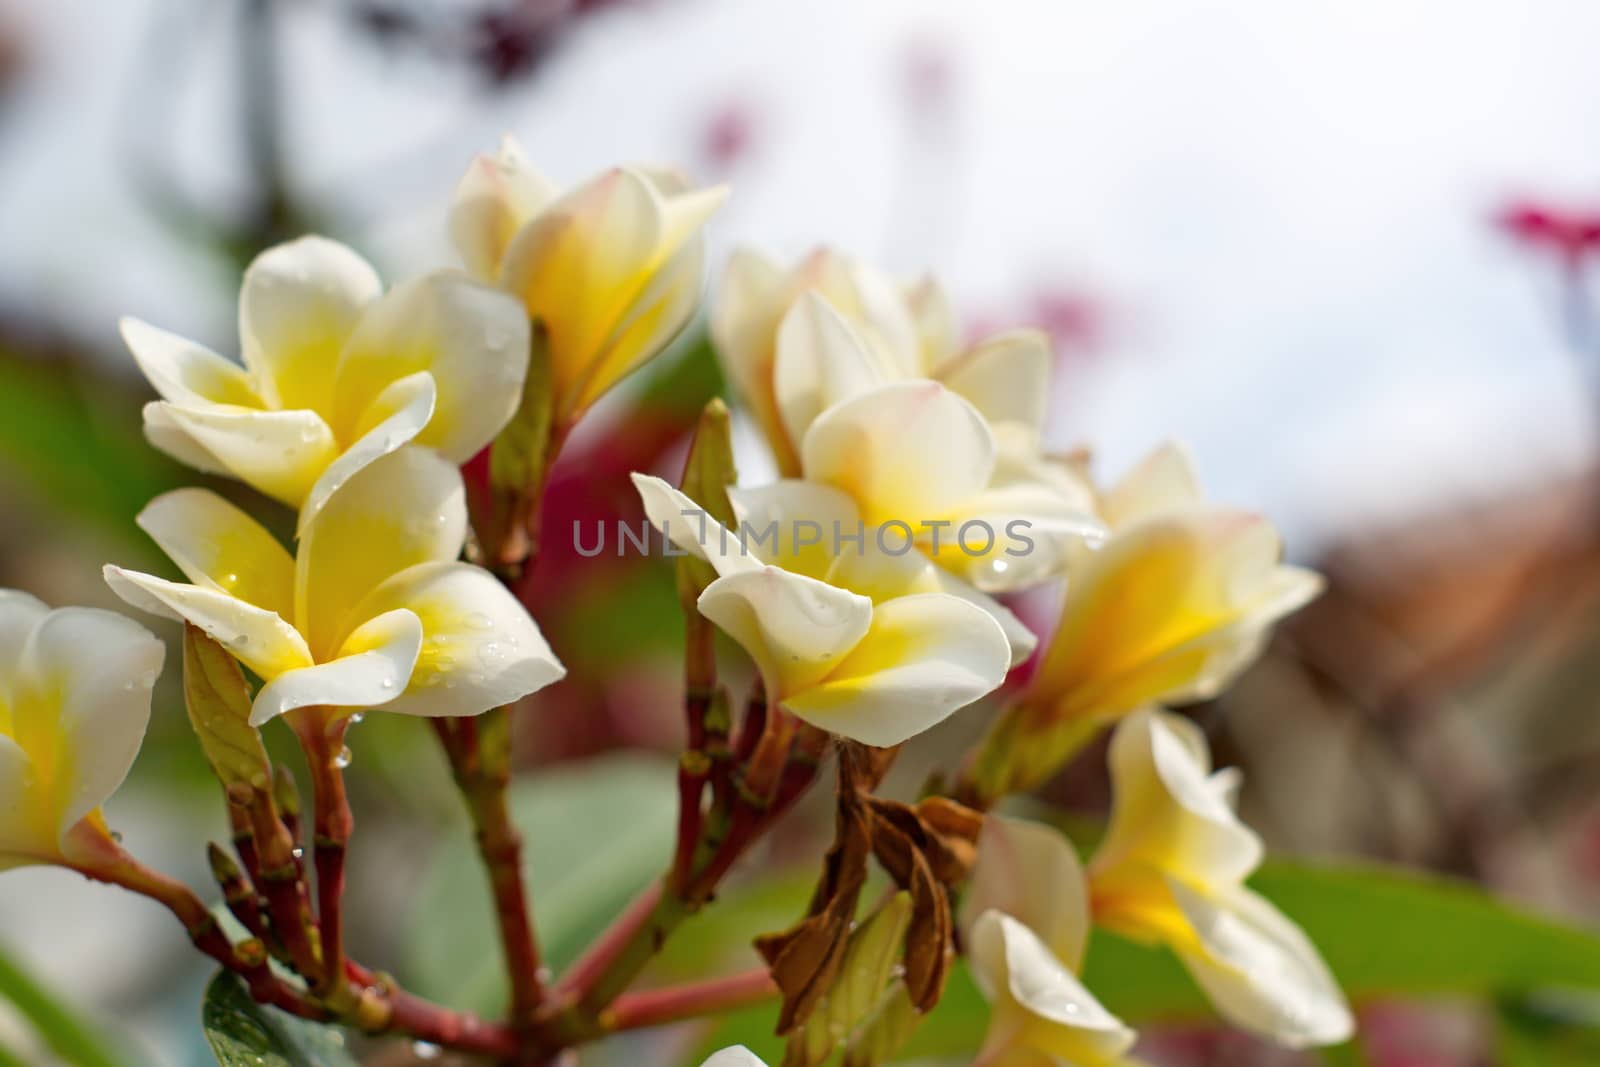 white and yellow Plumeria flower. (frangipani flowers, Frangipani, Pagoda tree or Temple tree) on natural light background